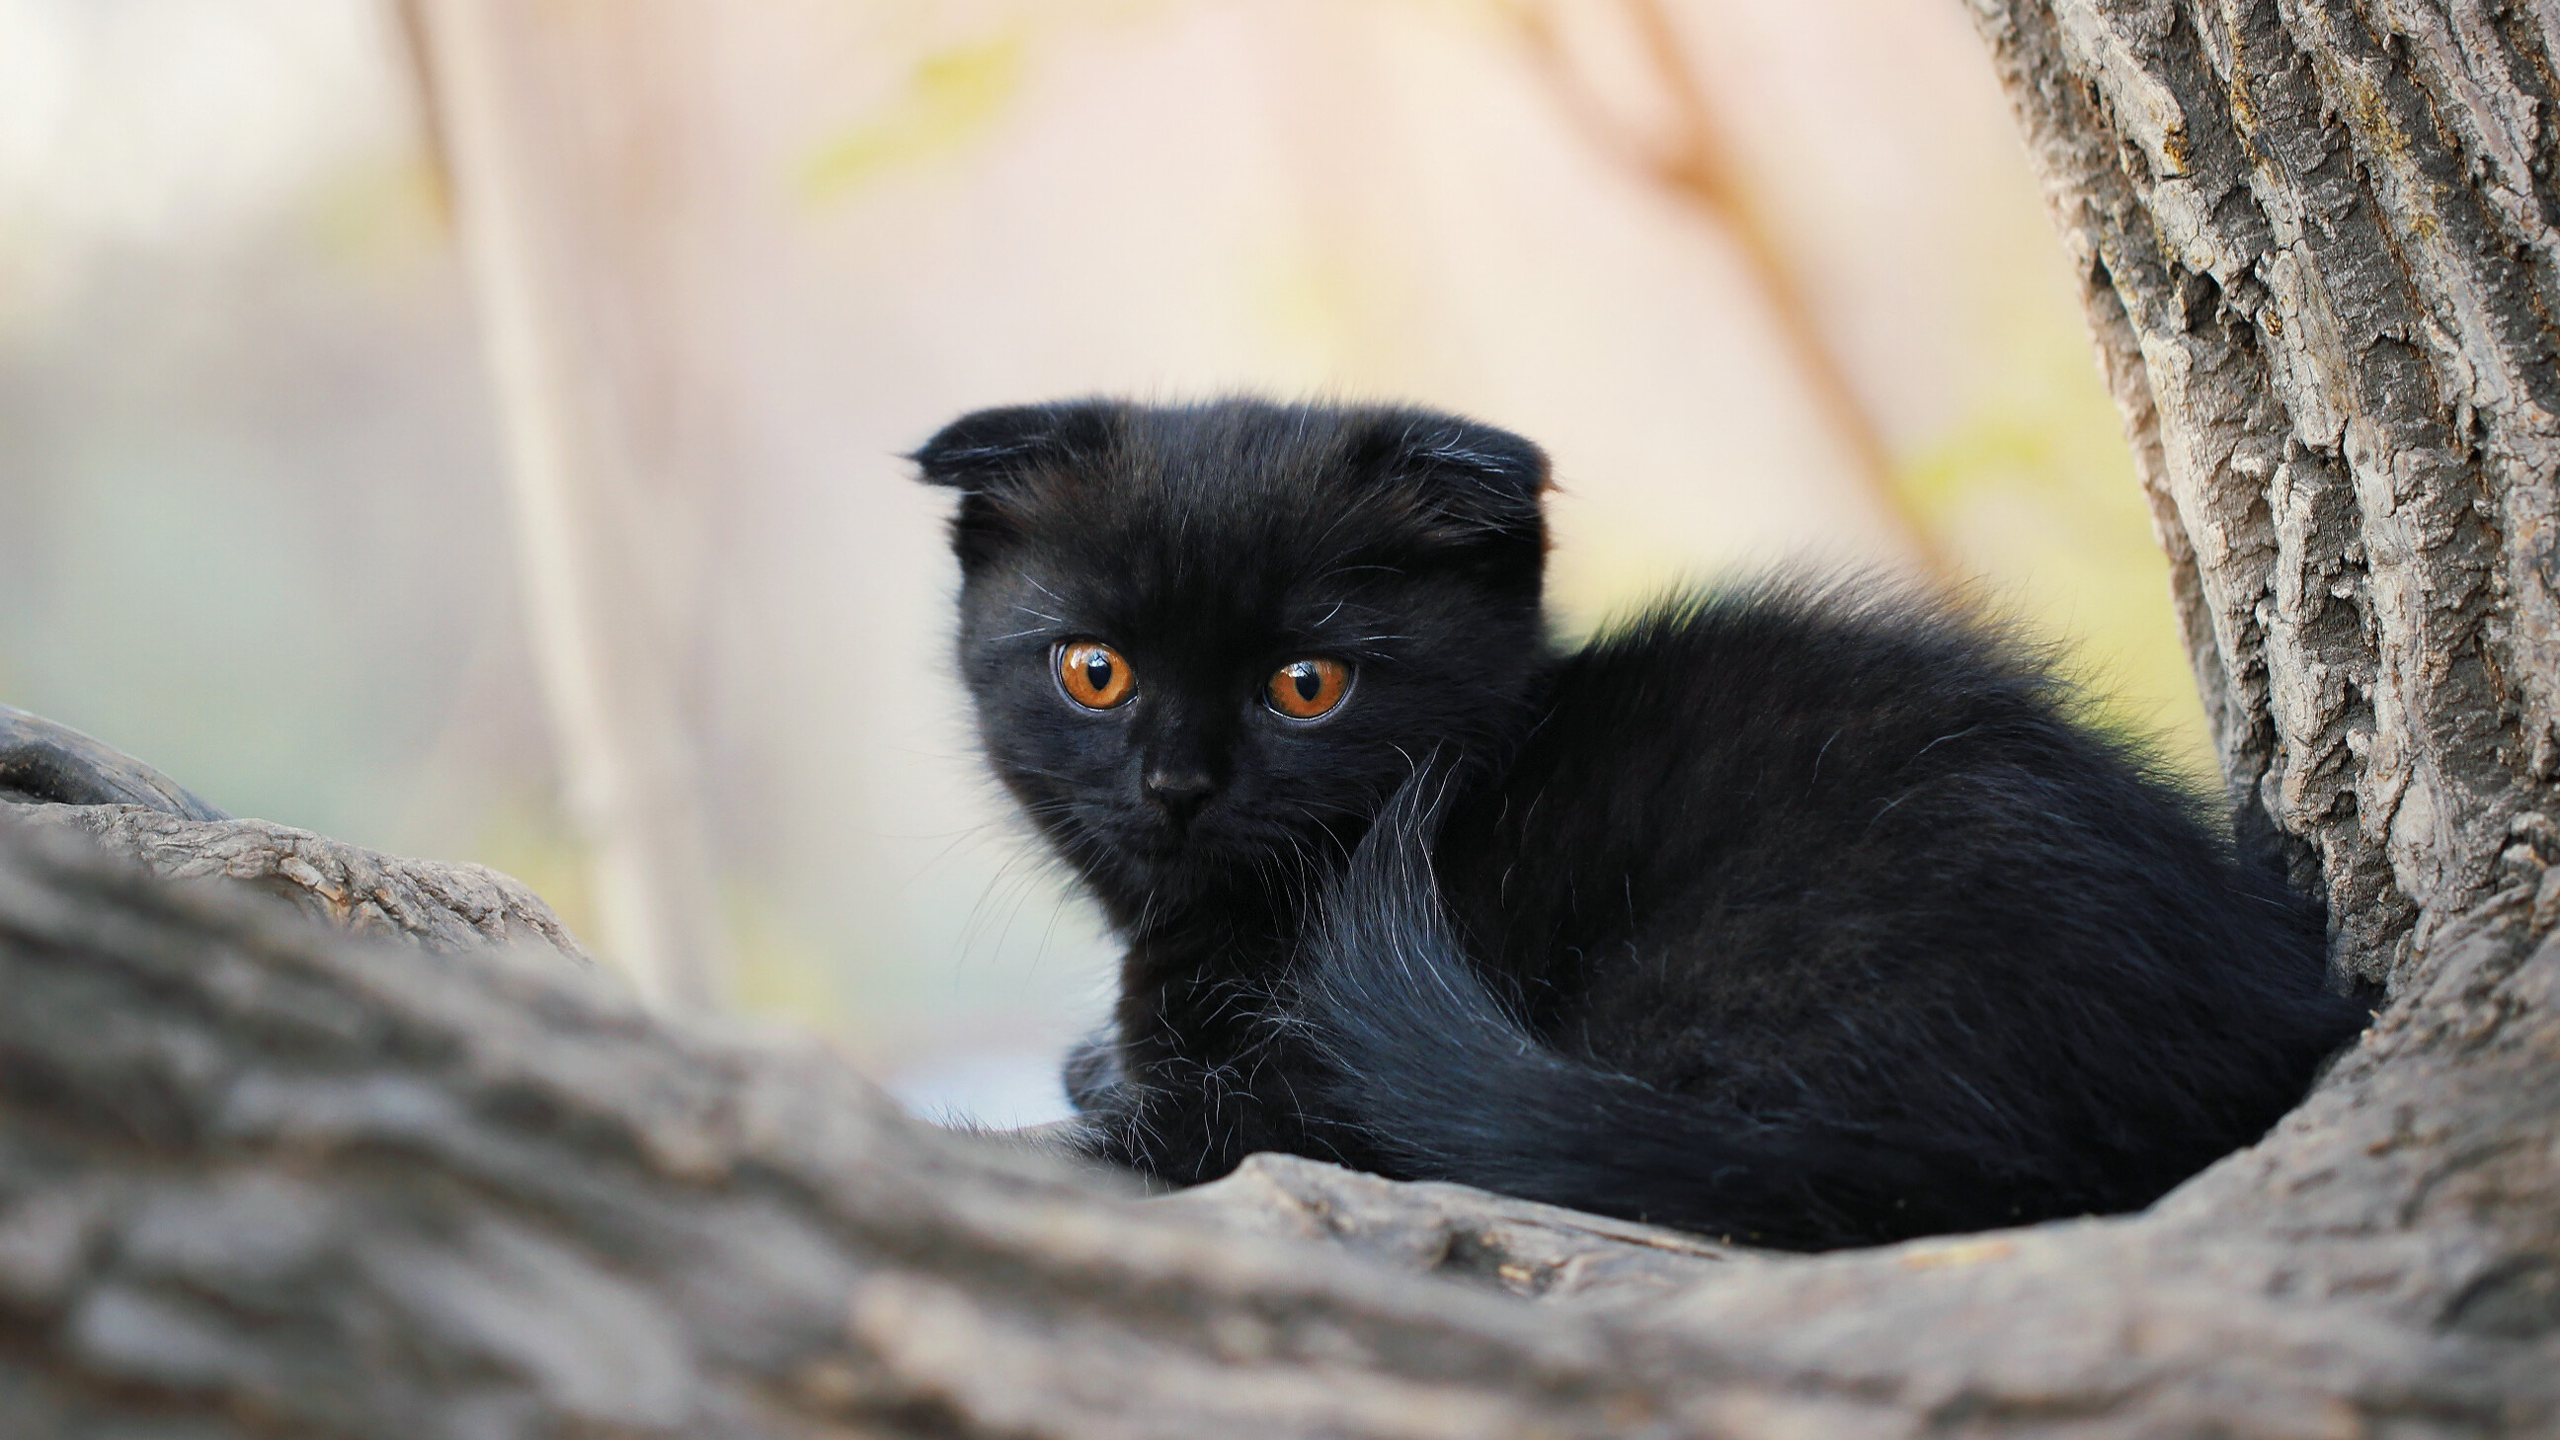 Orange Eyes Black Cat Kitten On Tree Trunk 2K Kitten